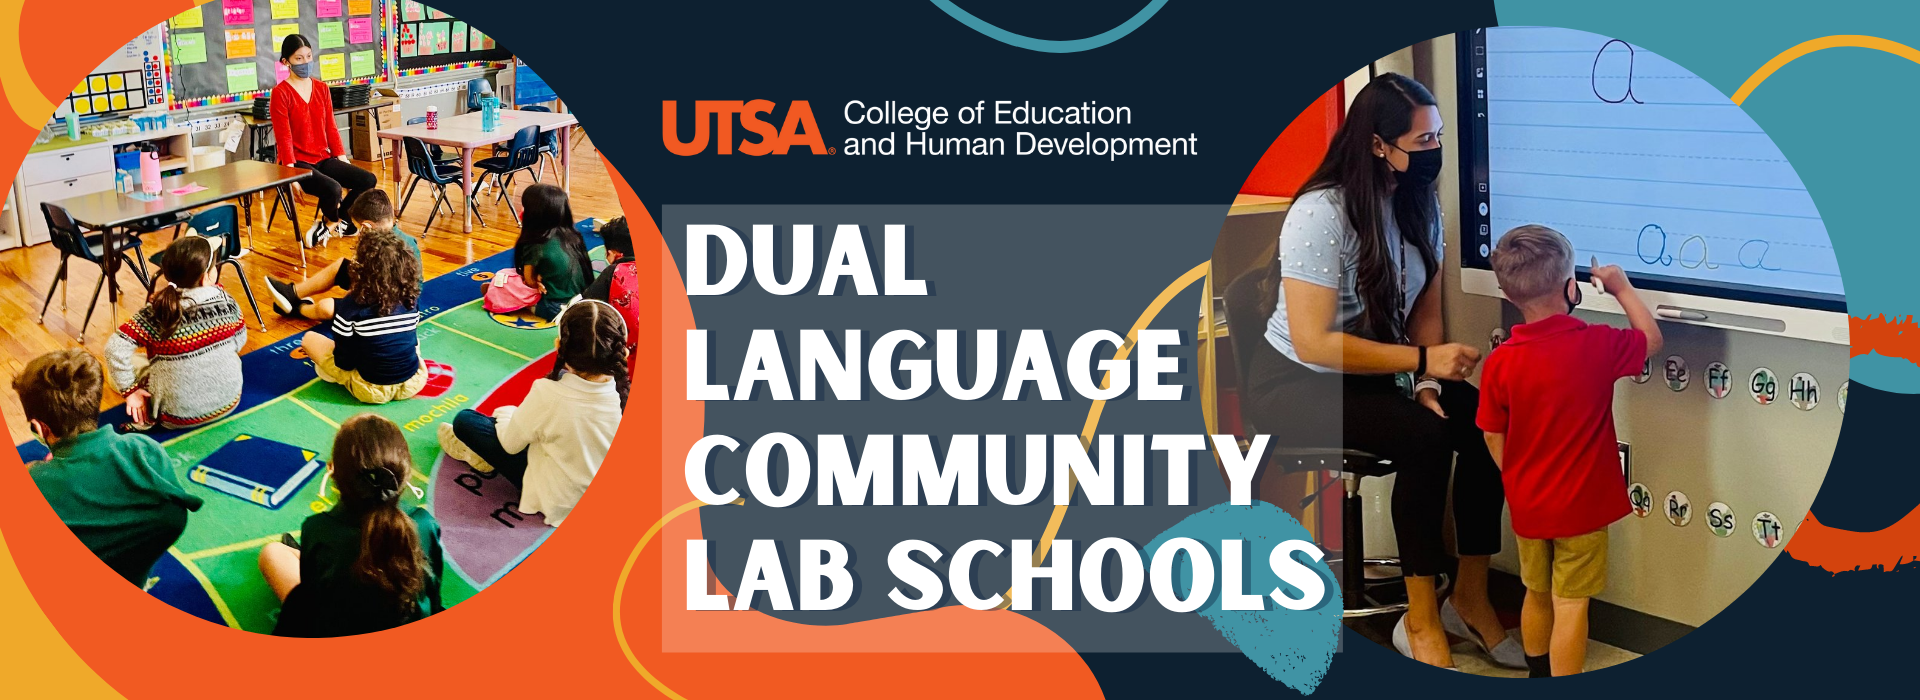 Duo Language Community Lab Schools Header